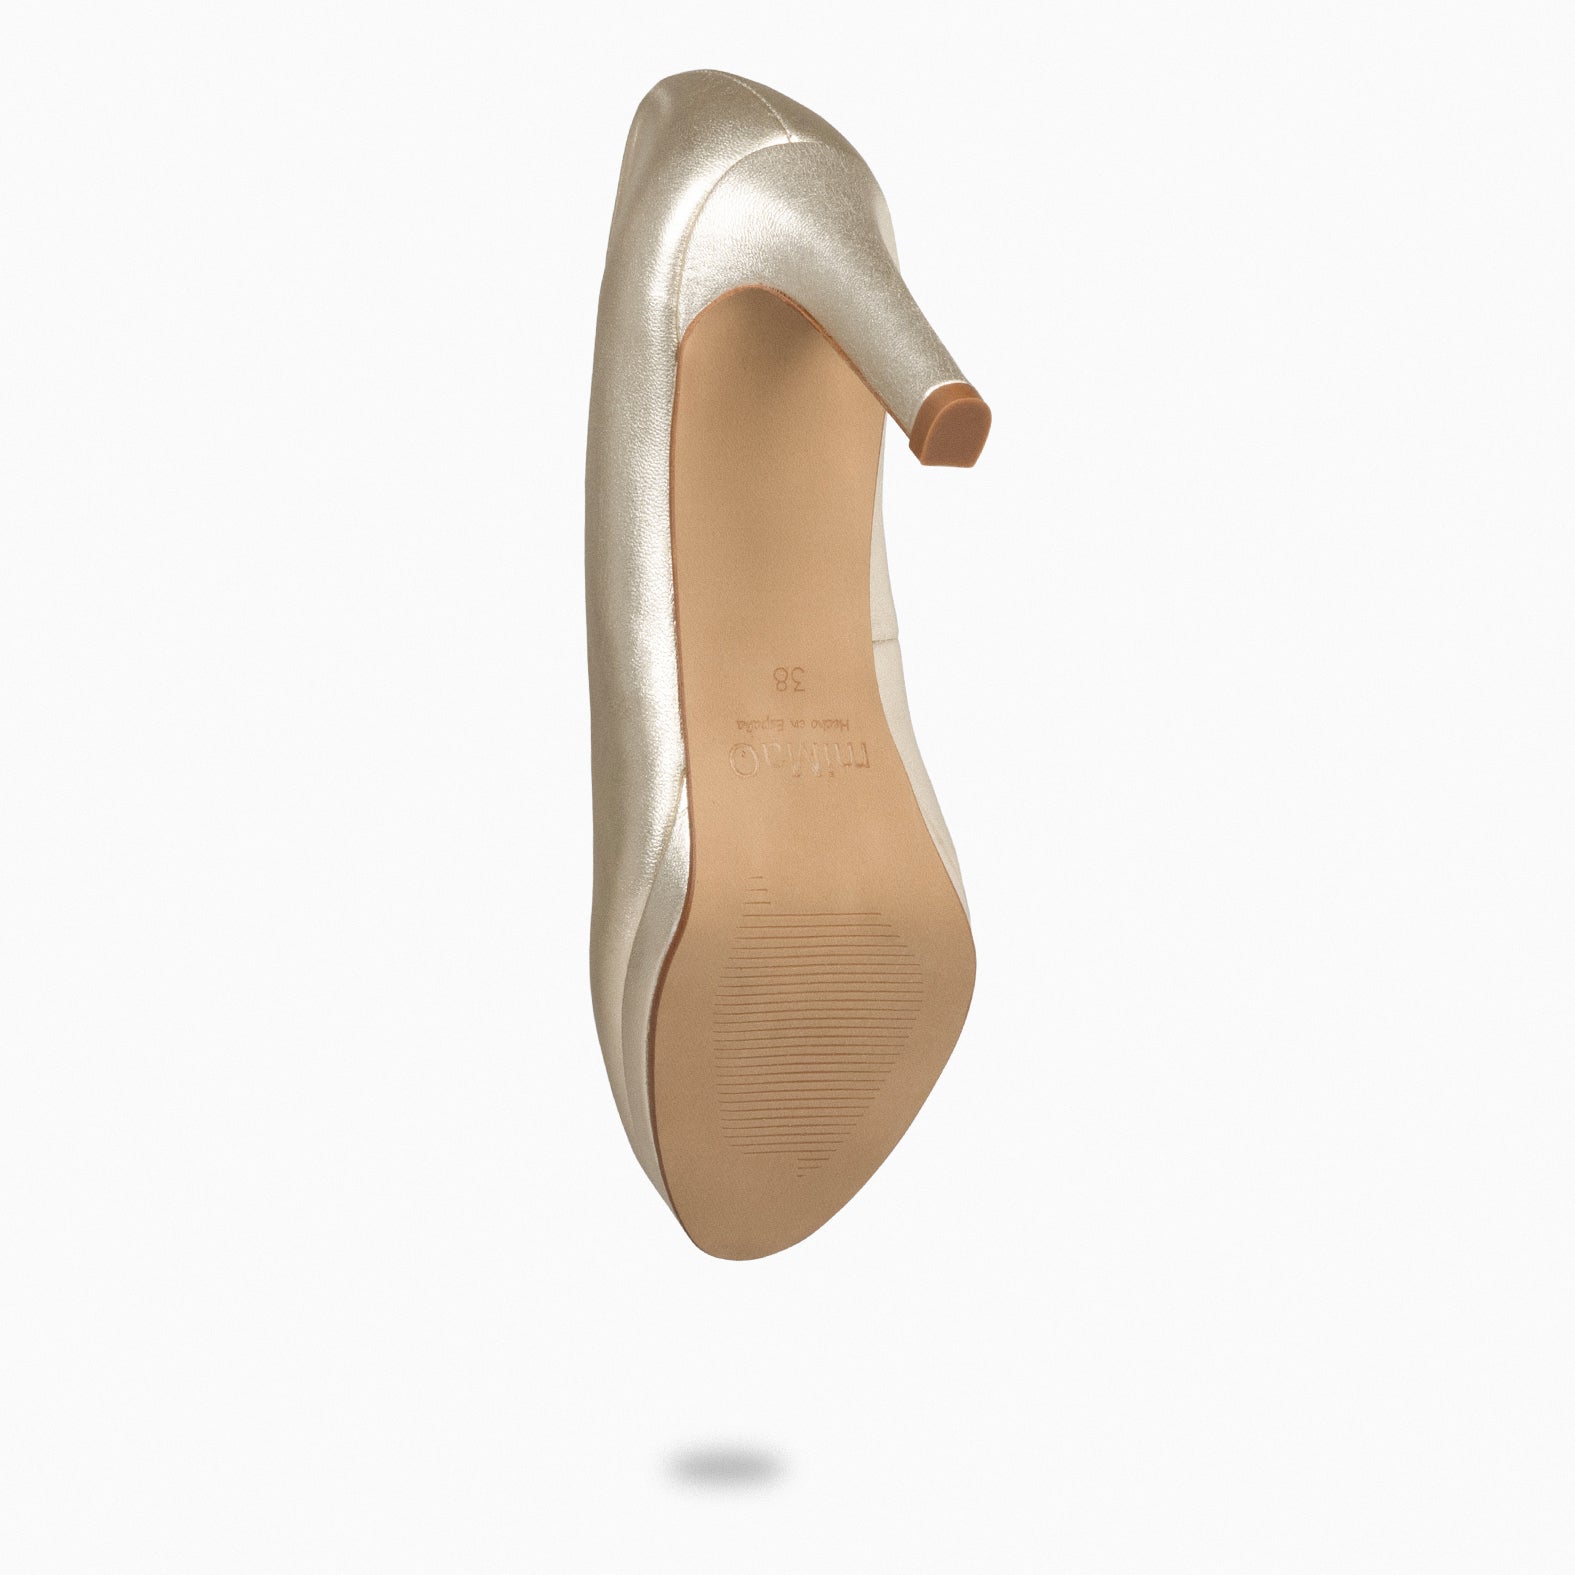 PLATFORM – GOLDEN high heels with platform